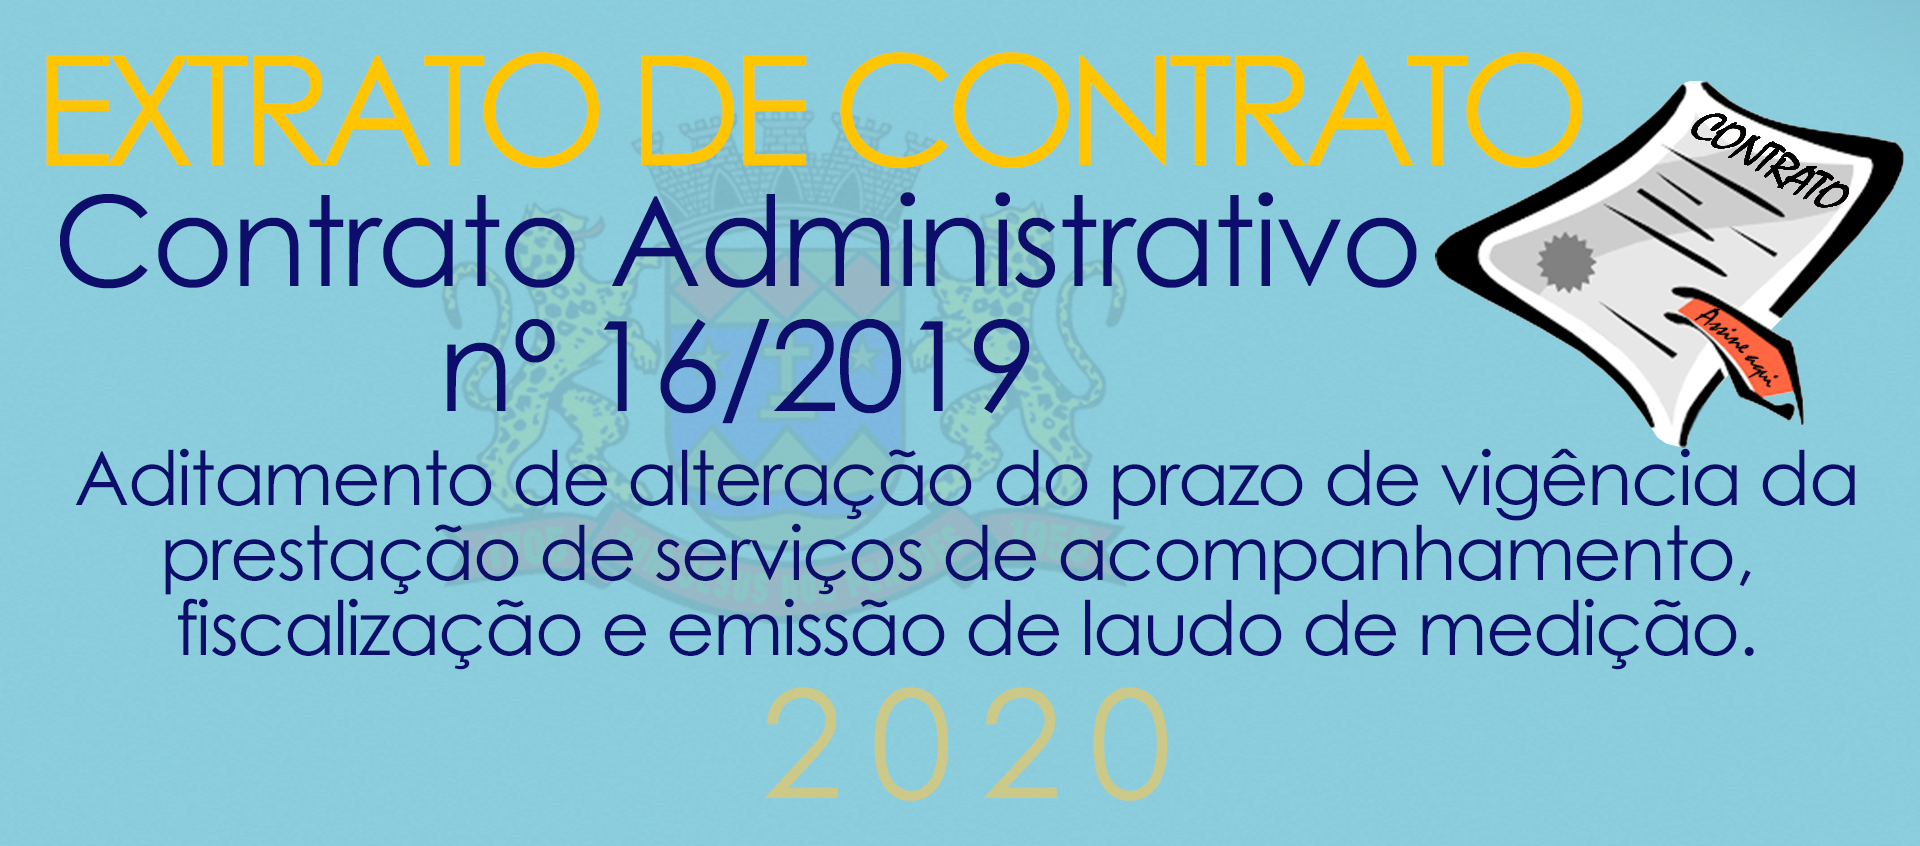 Aditamento do Contrato Administrativo nº 16/2019